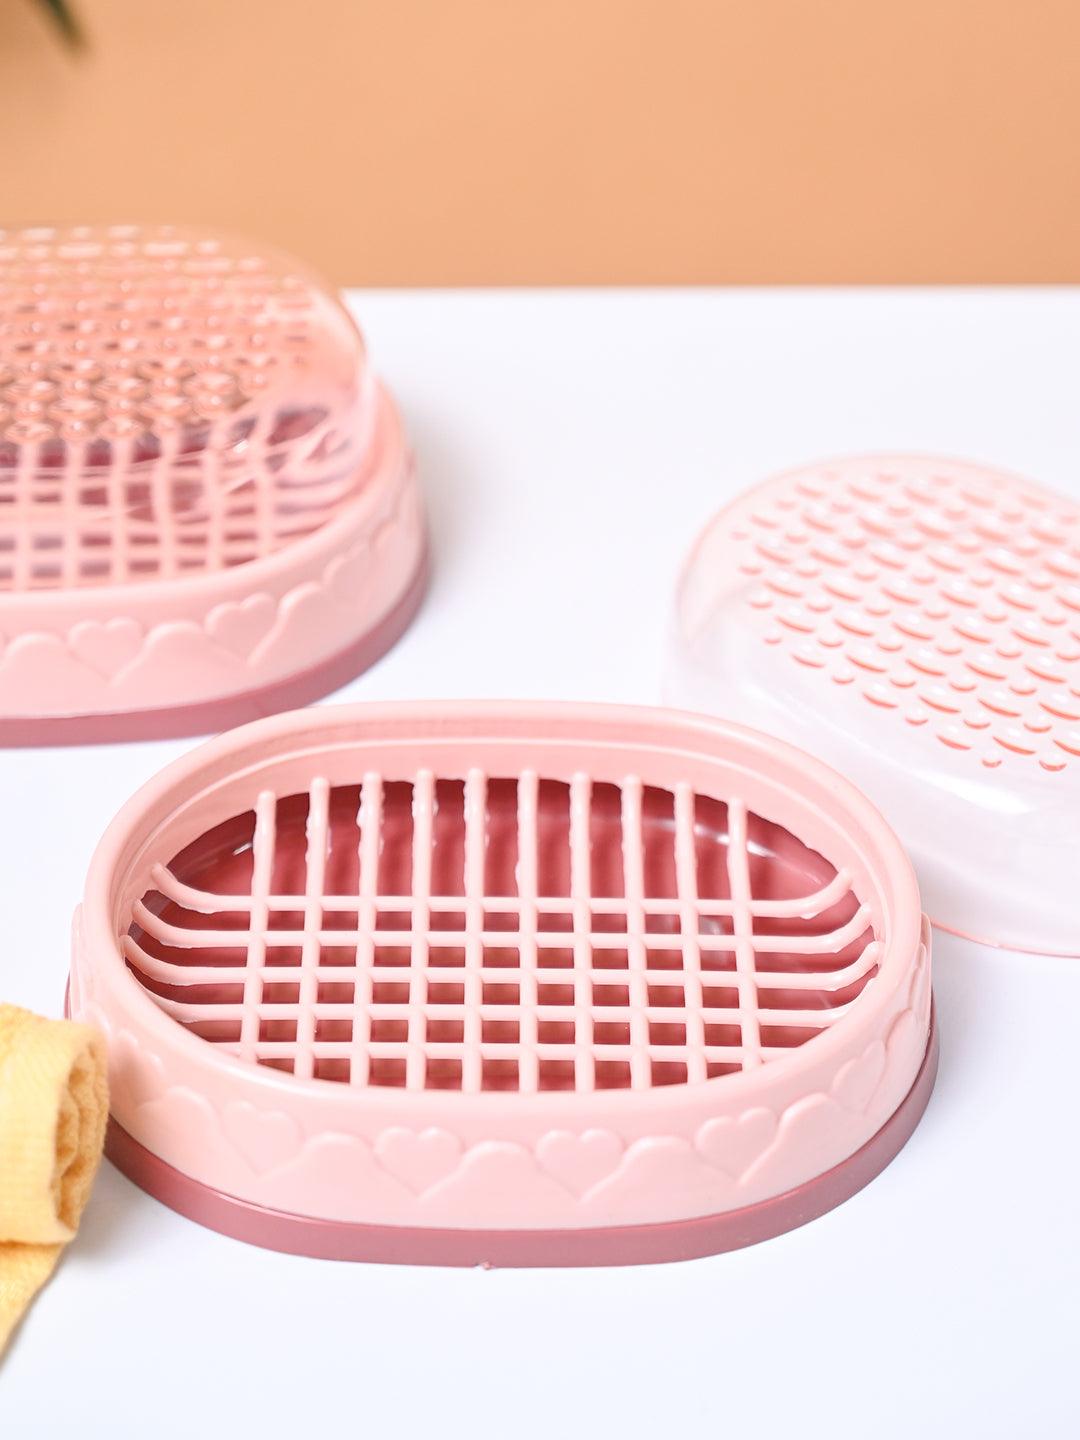 Market99 Plastic Peach Soap Dish - Set Of 2